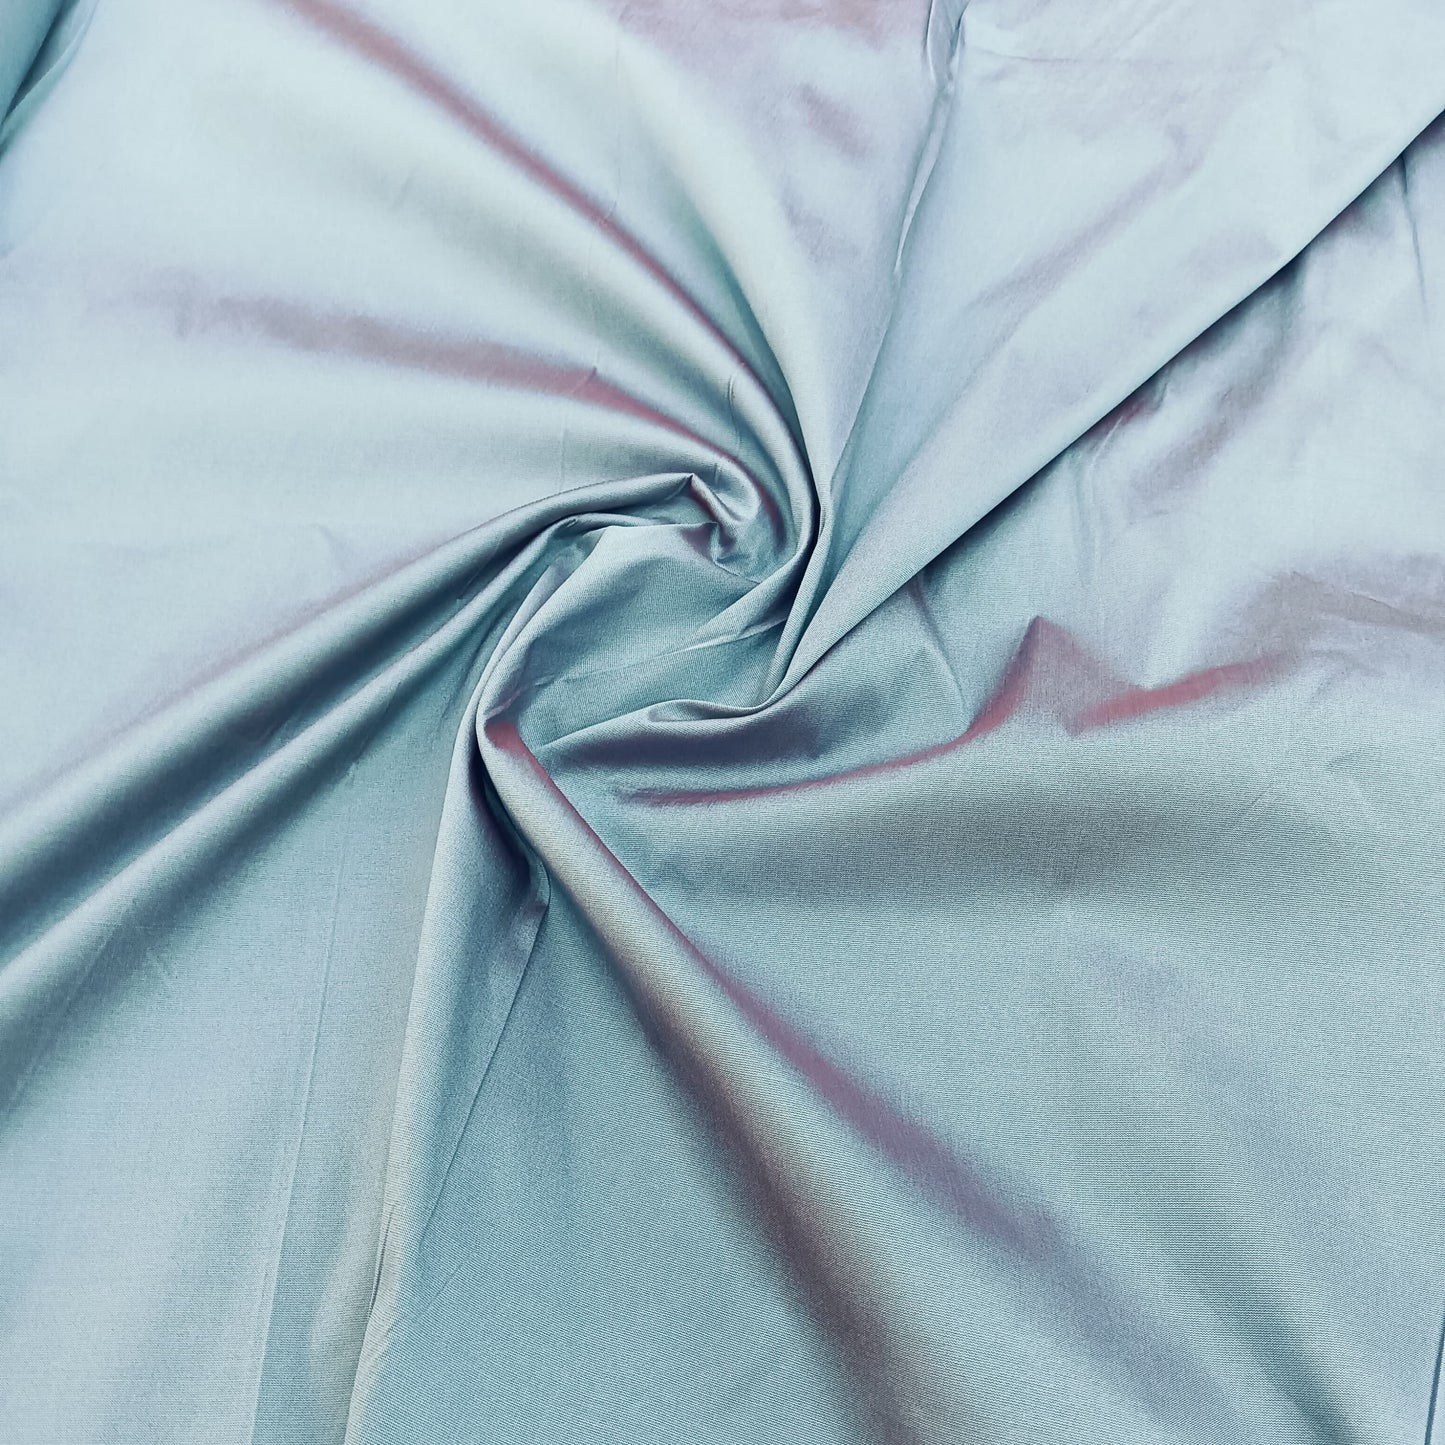 Taffeta Silk Fabric in all Plain Solid Colors